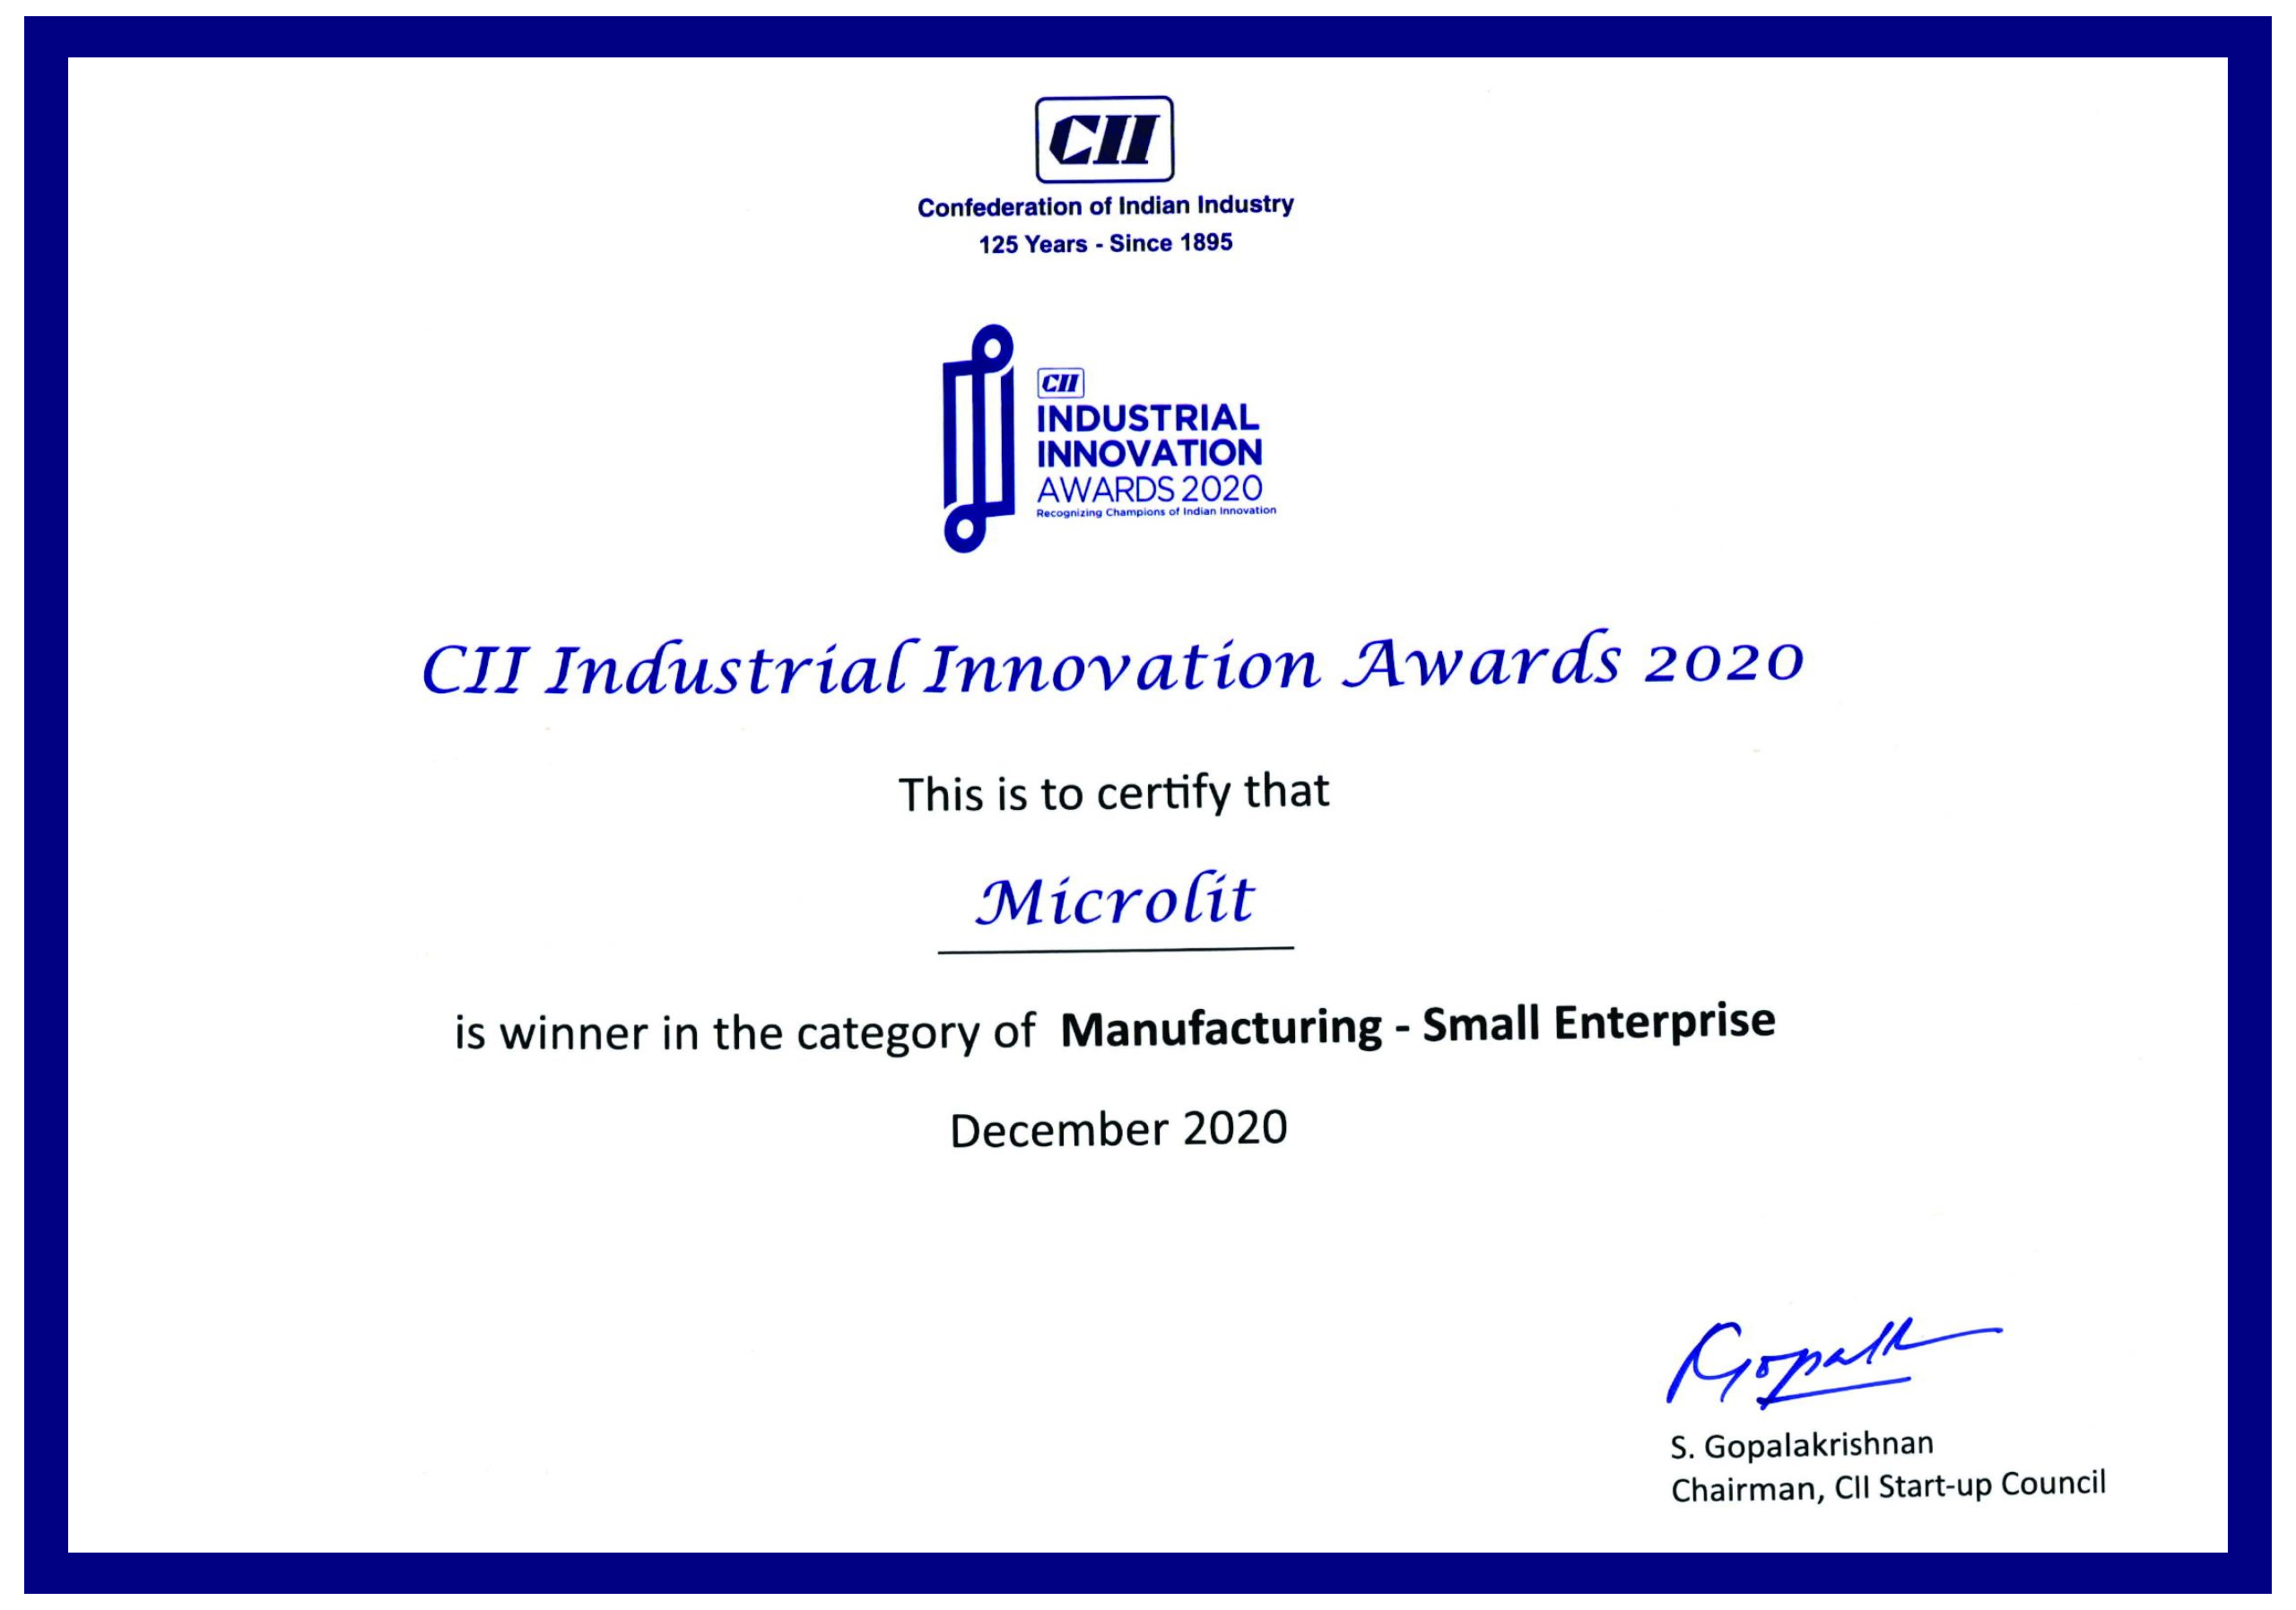 CII Industrial Innovation Awards Manufacturing (SSI) 2020